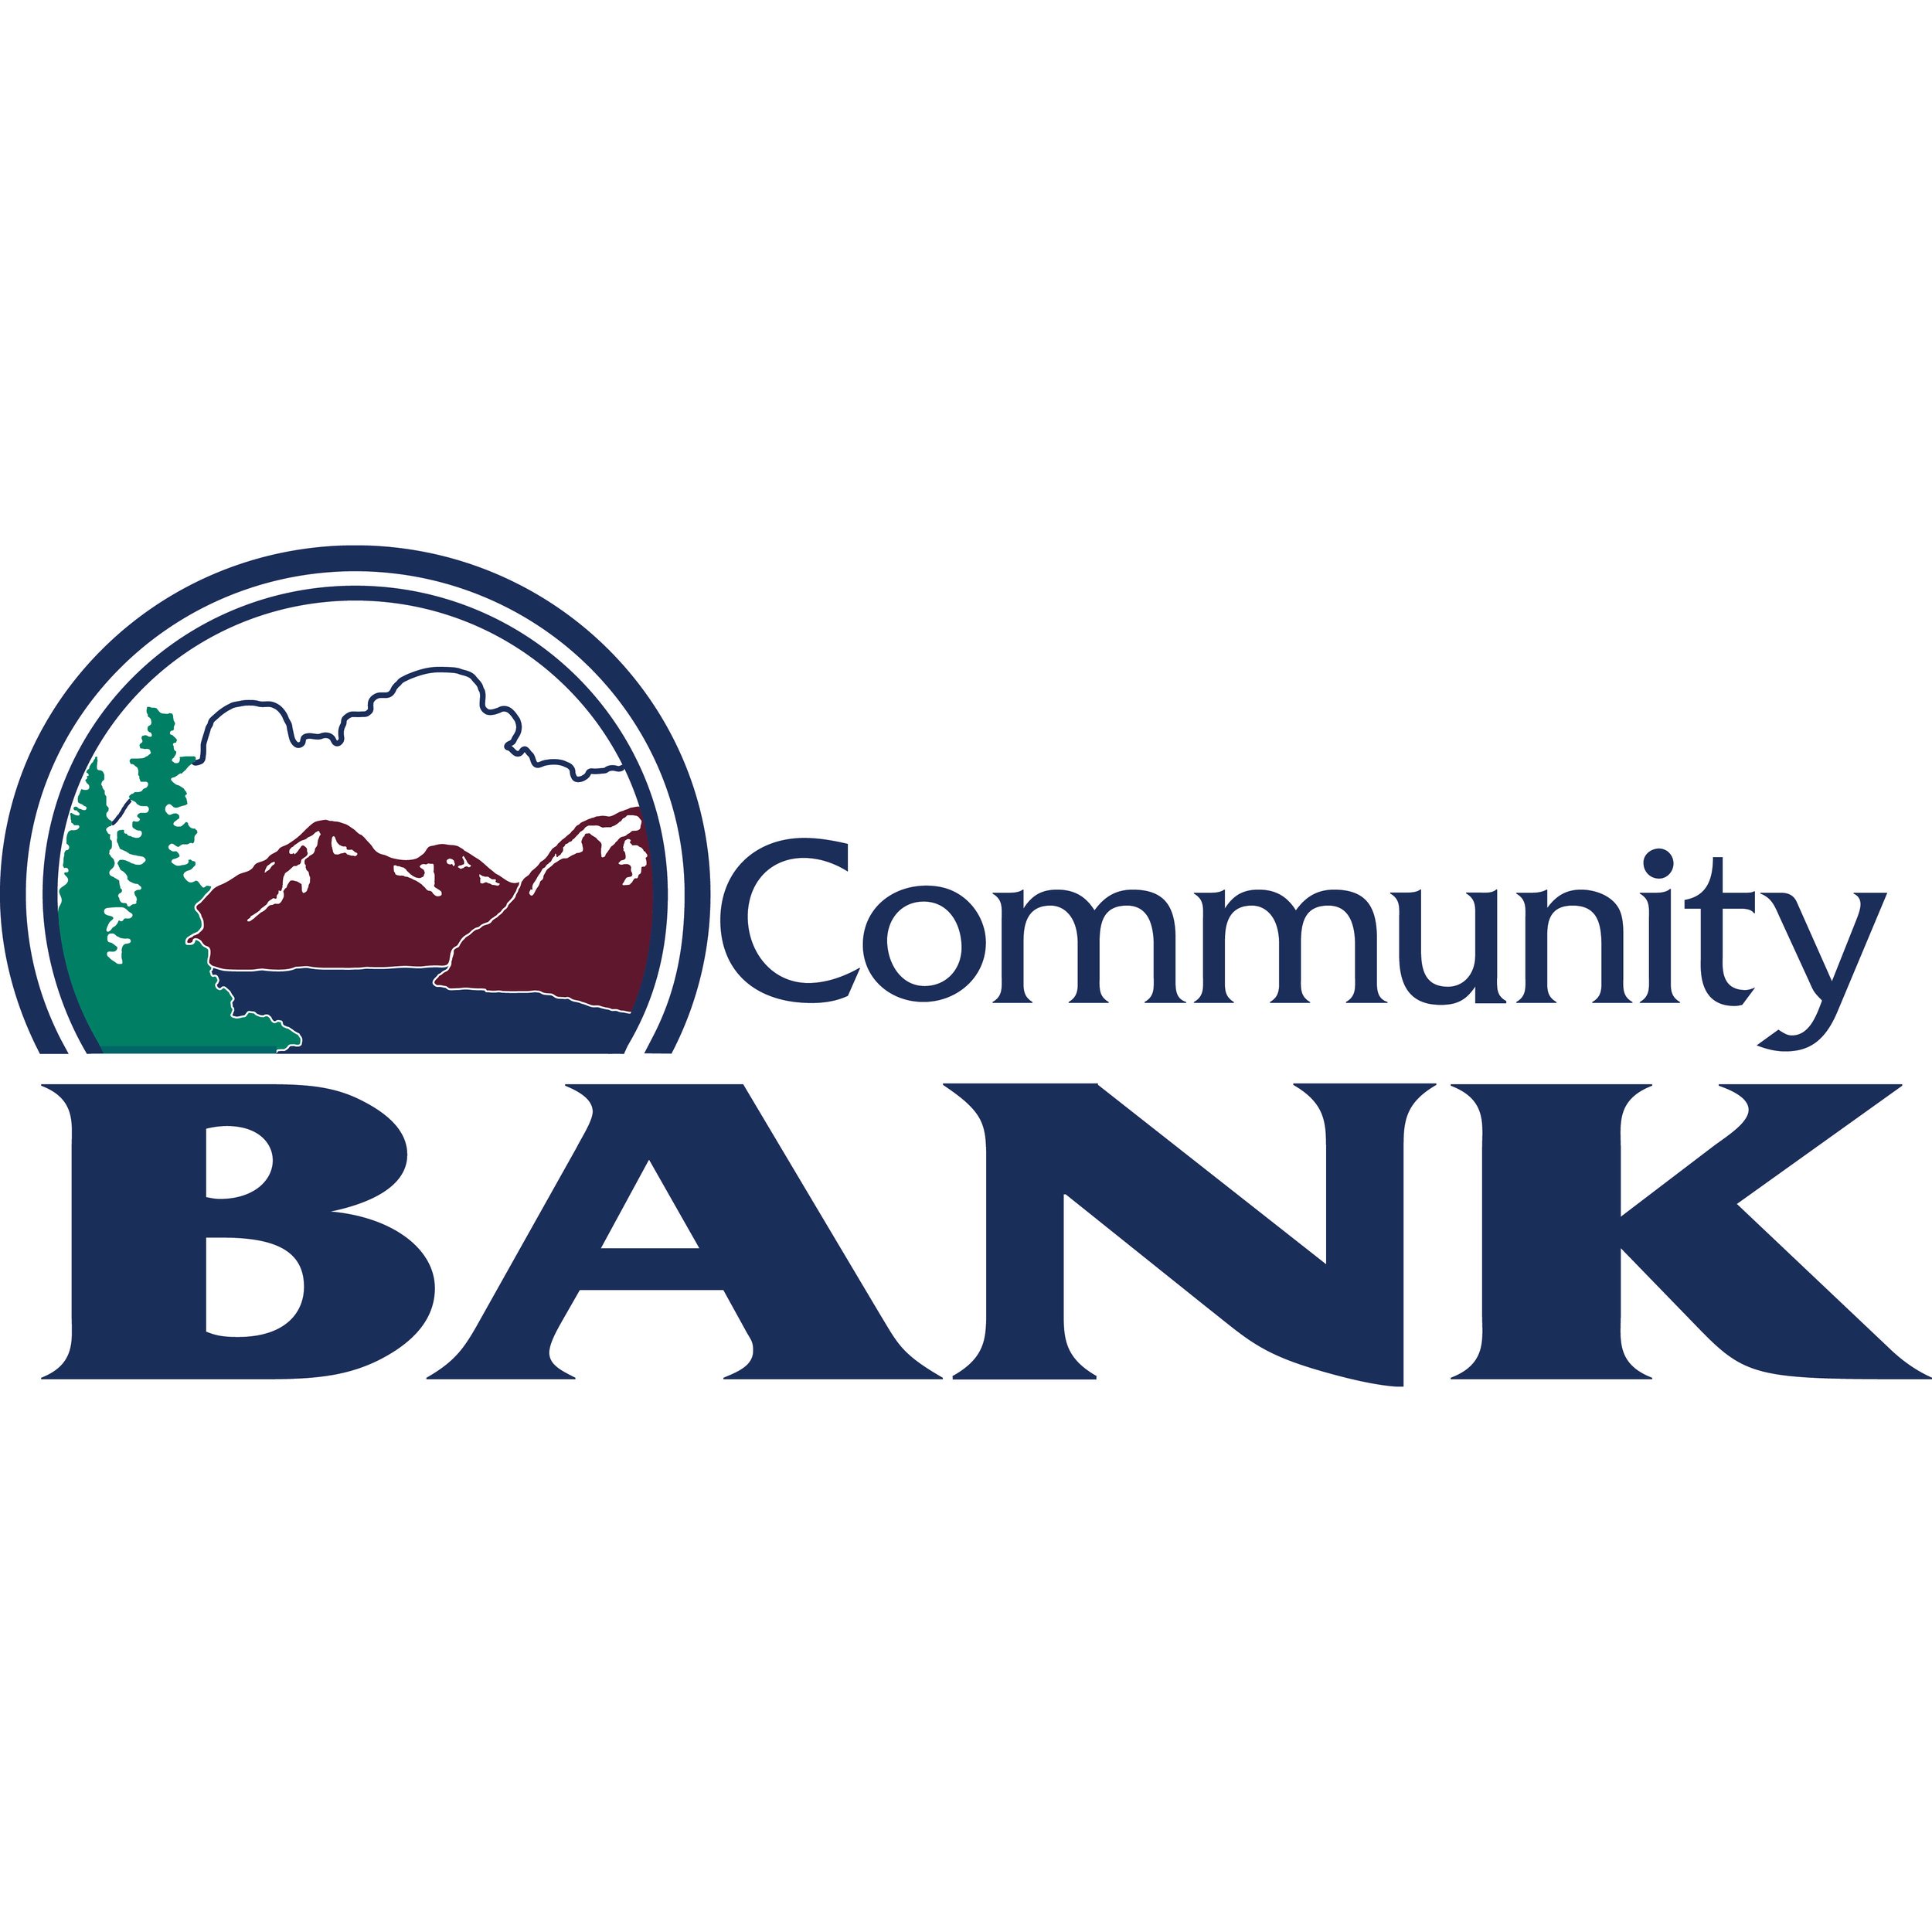 Community Bank.png